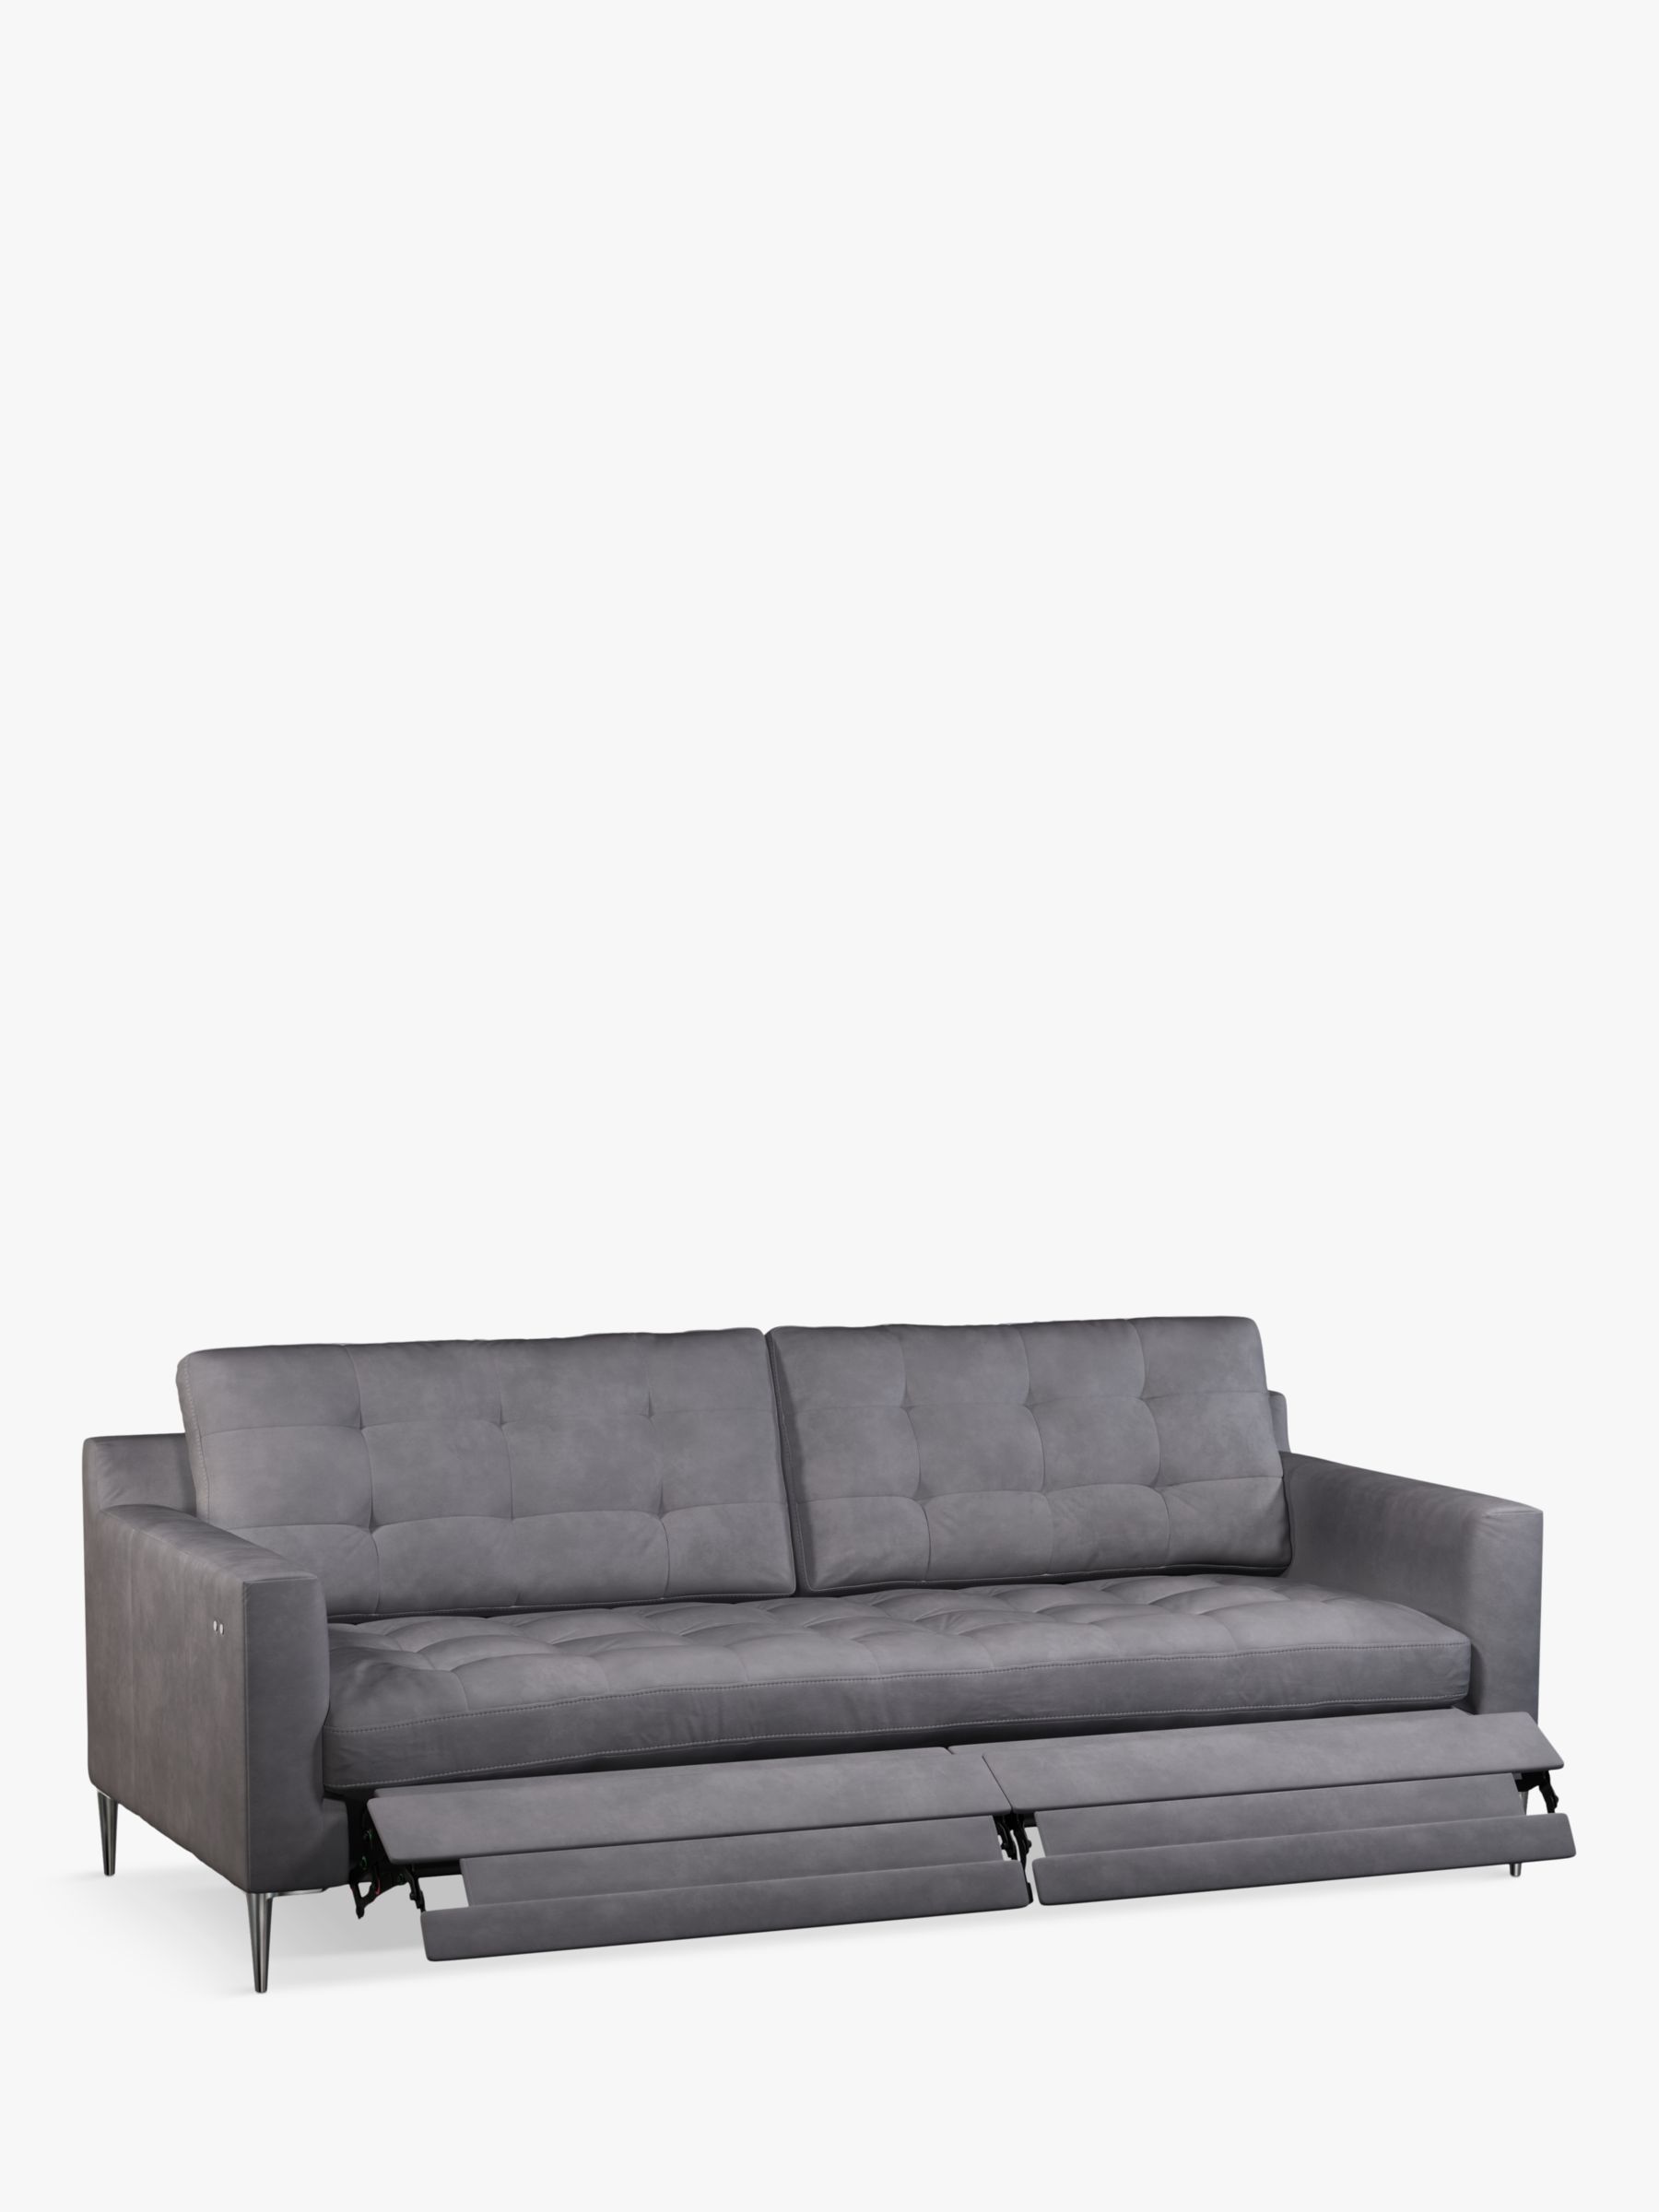 Draper Range, John Lewis Draper Motion Large 3 Seater Leather Sofa with Footrest Mechanism, Metal Leg, Soft Touch Grey